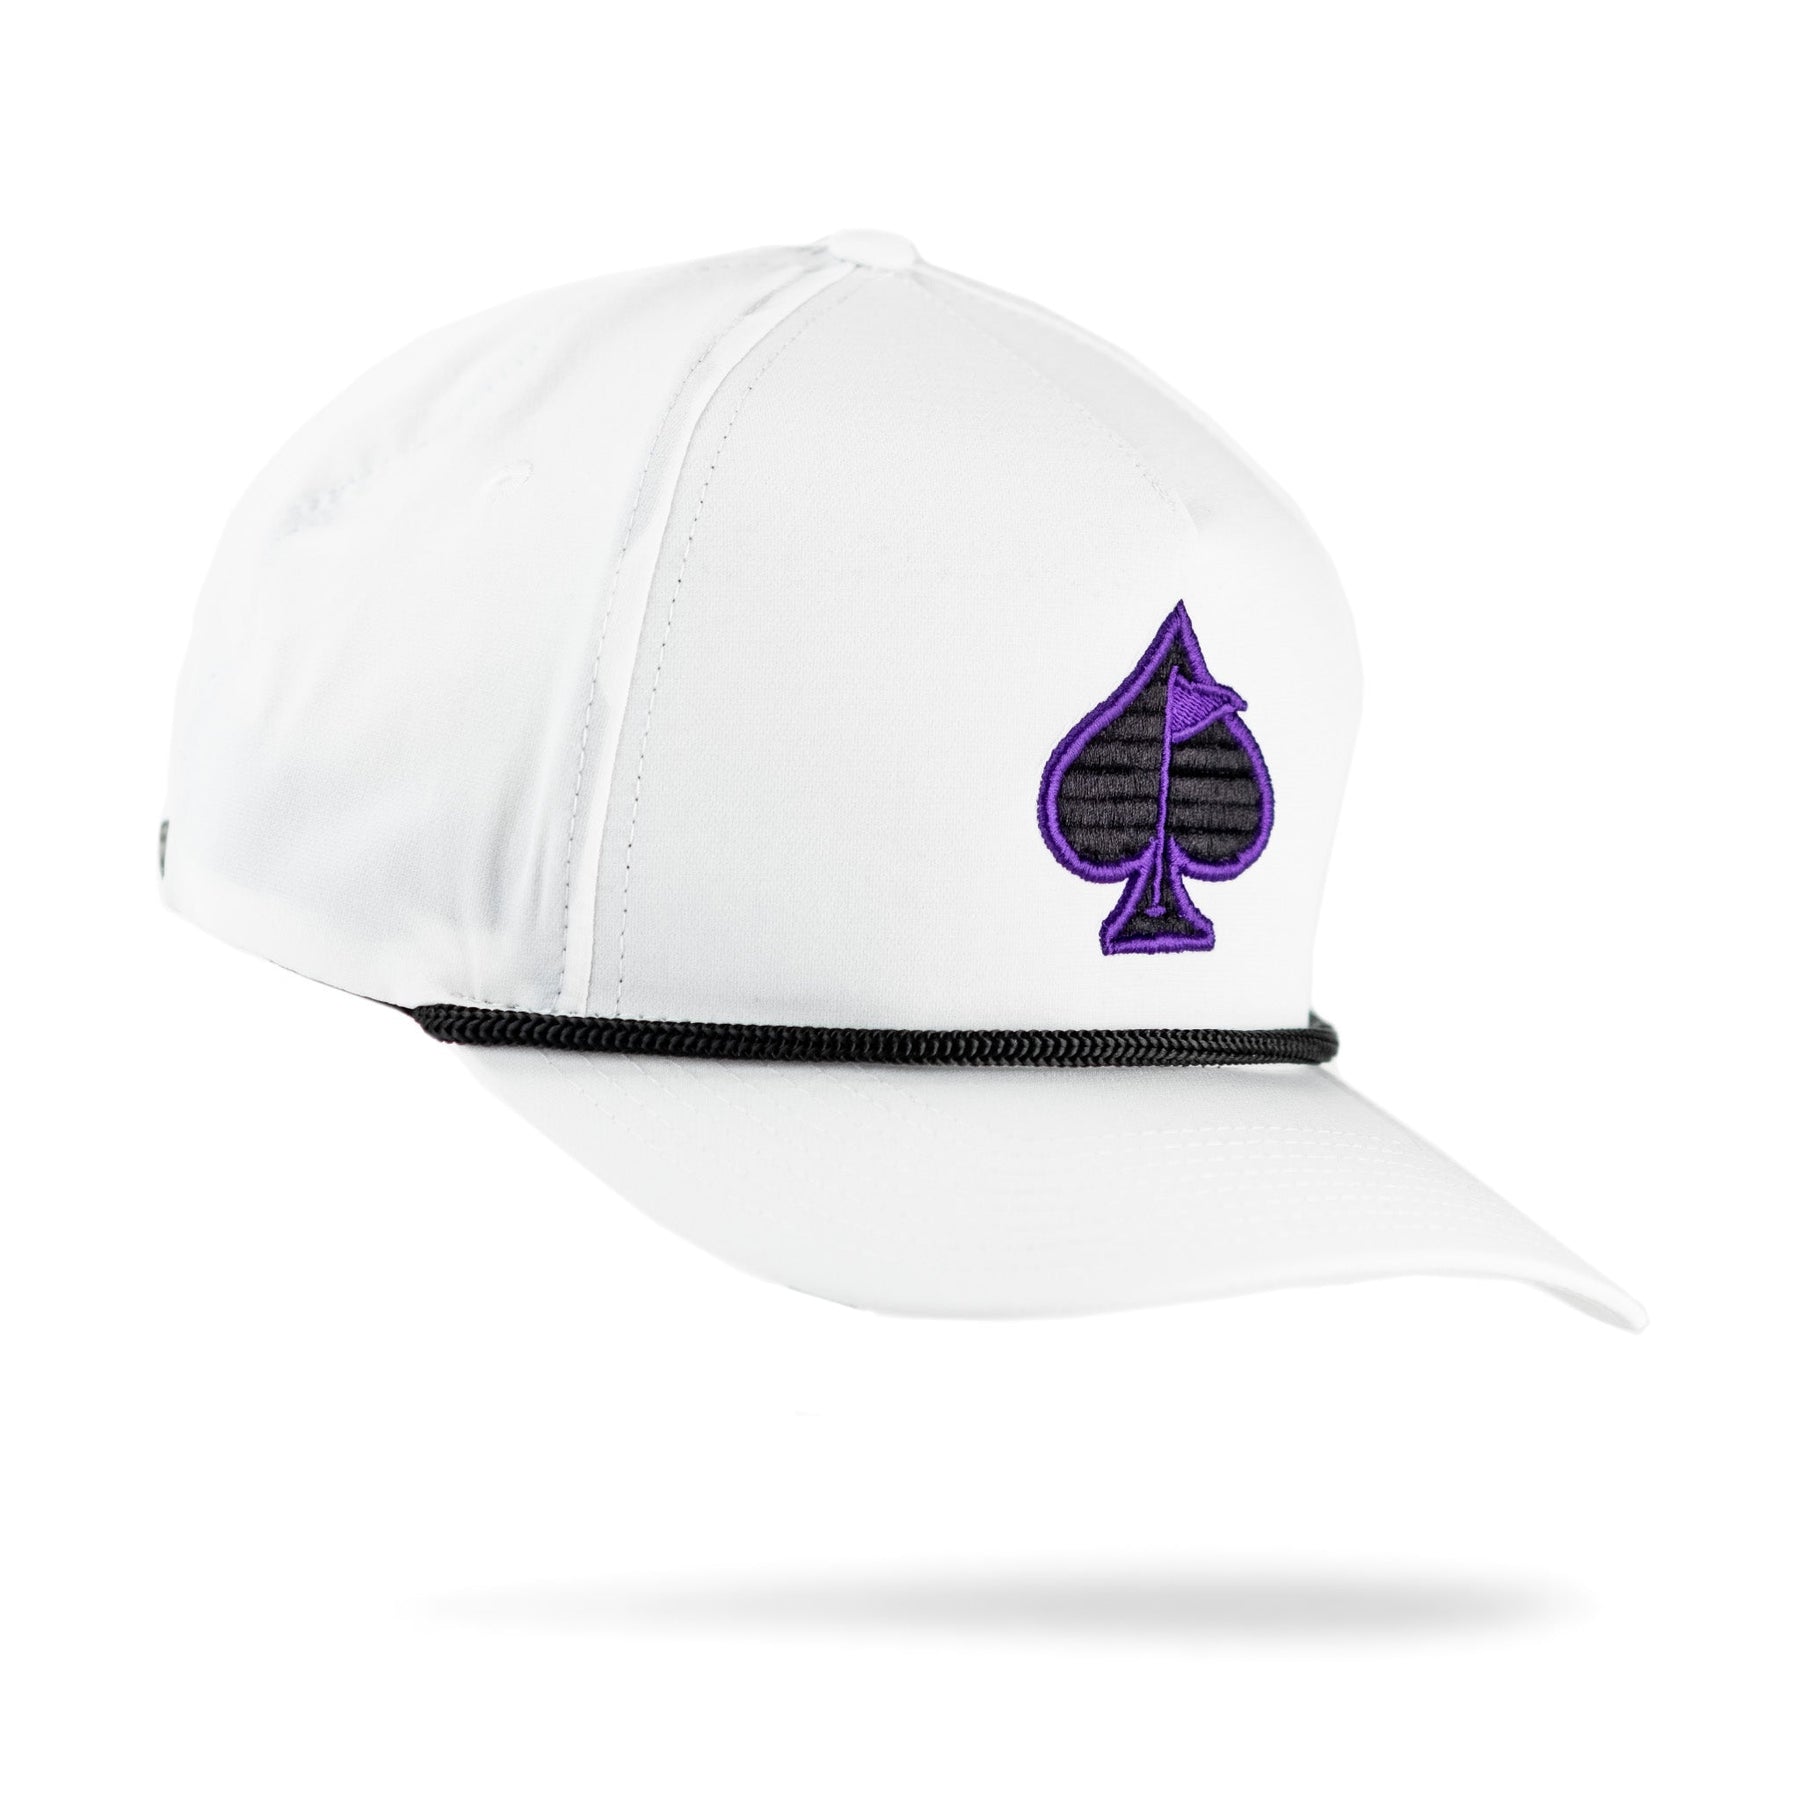 Spade Rope Hat - White/Purple